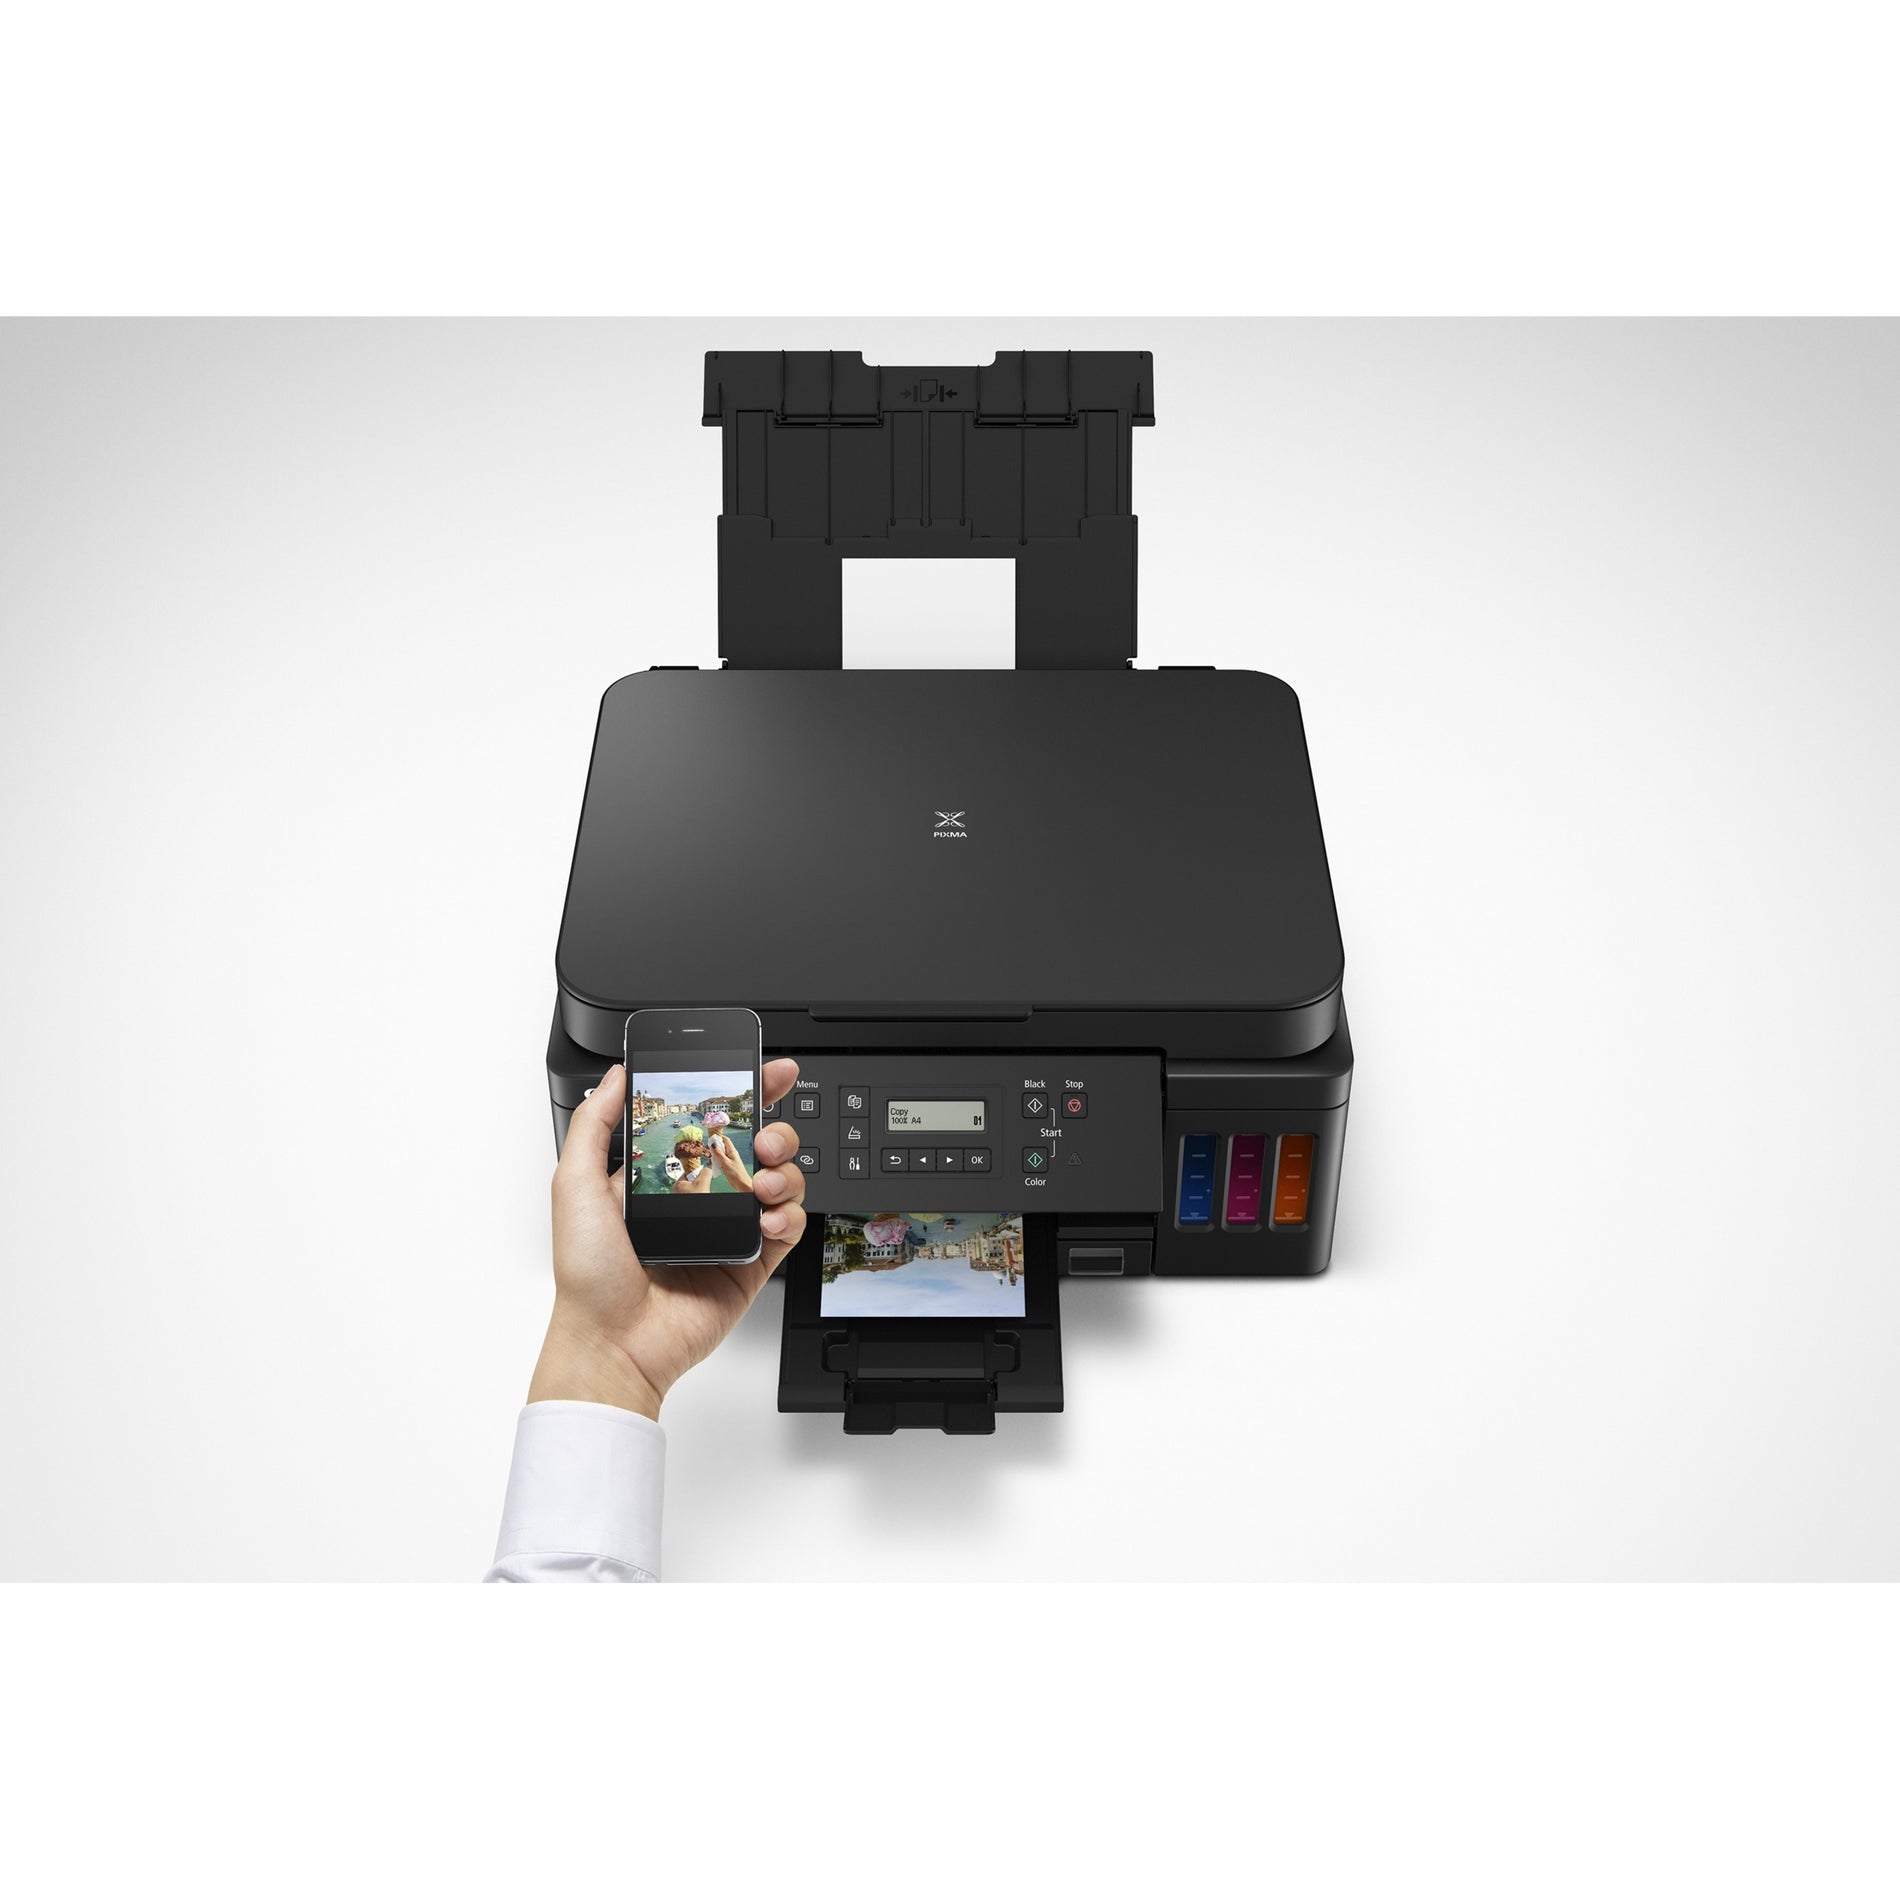 Canon 3112C002 PIXMA G5020 Wireless MegaTank Inkjet Printer, Color, 1 Year Warranty